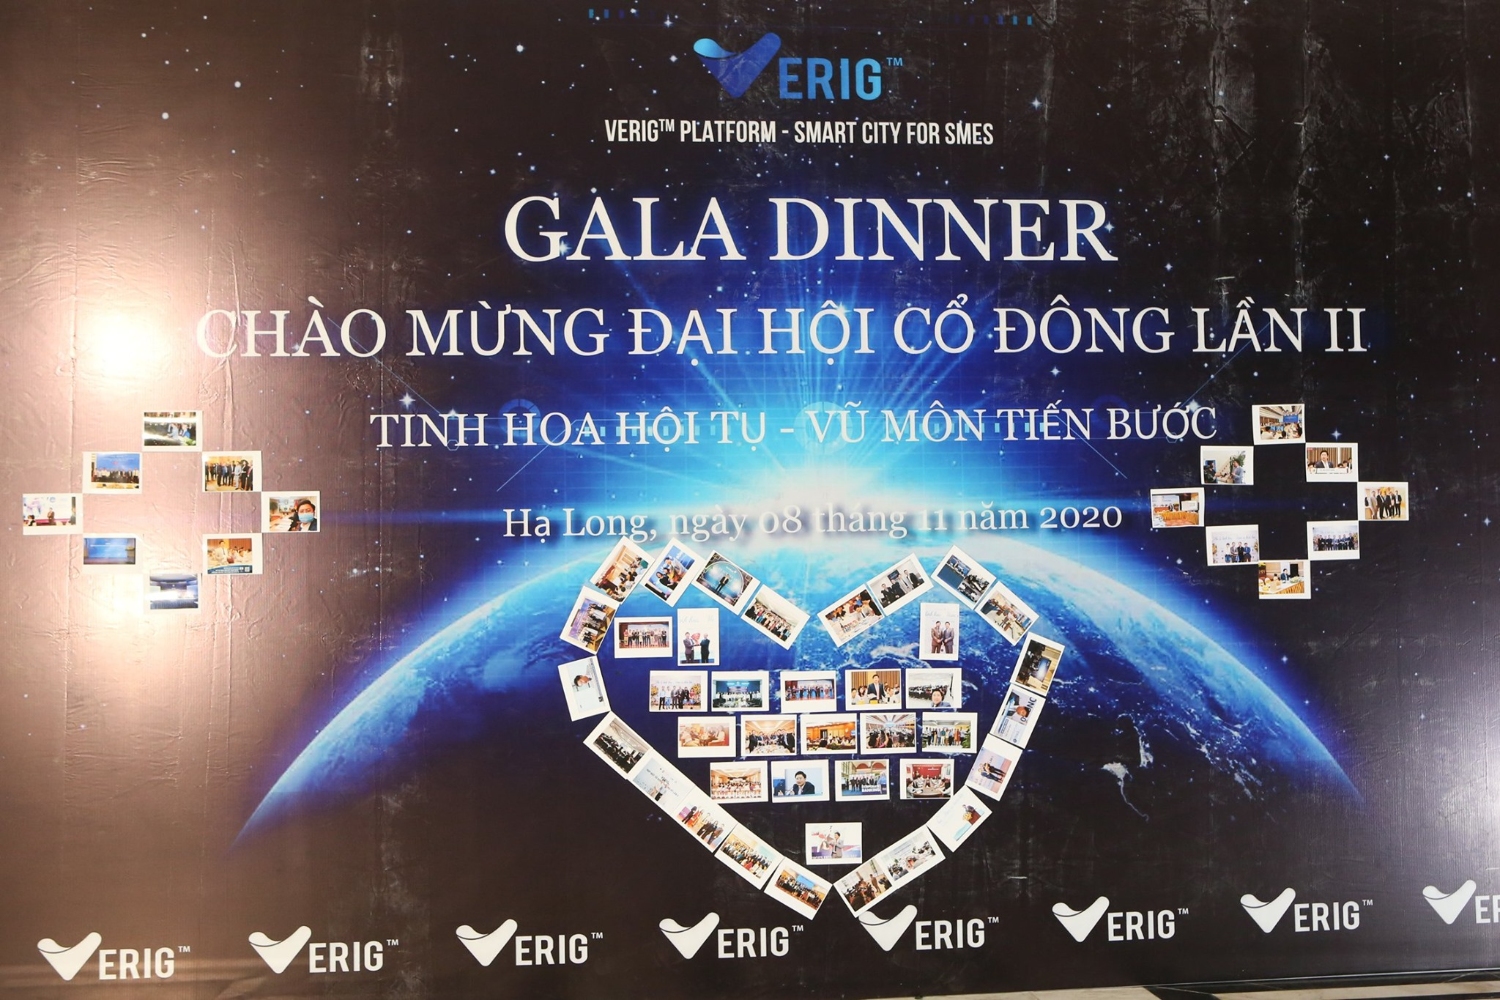 Gala Dinner program "Tinh hoa hội tụ - Vũ môn tiến bước": Commercial connection - Investment cooperation on digital platform "